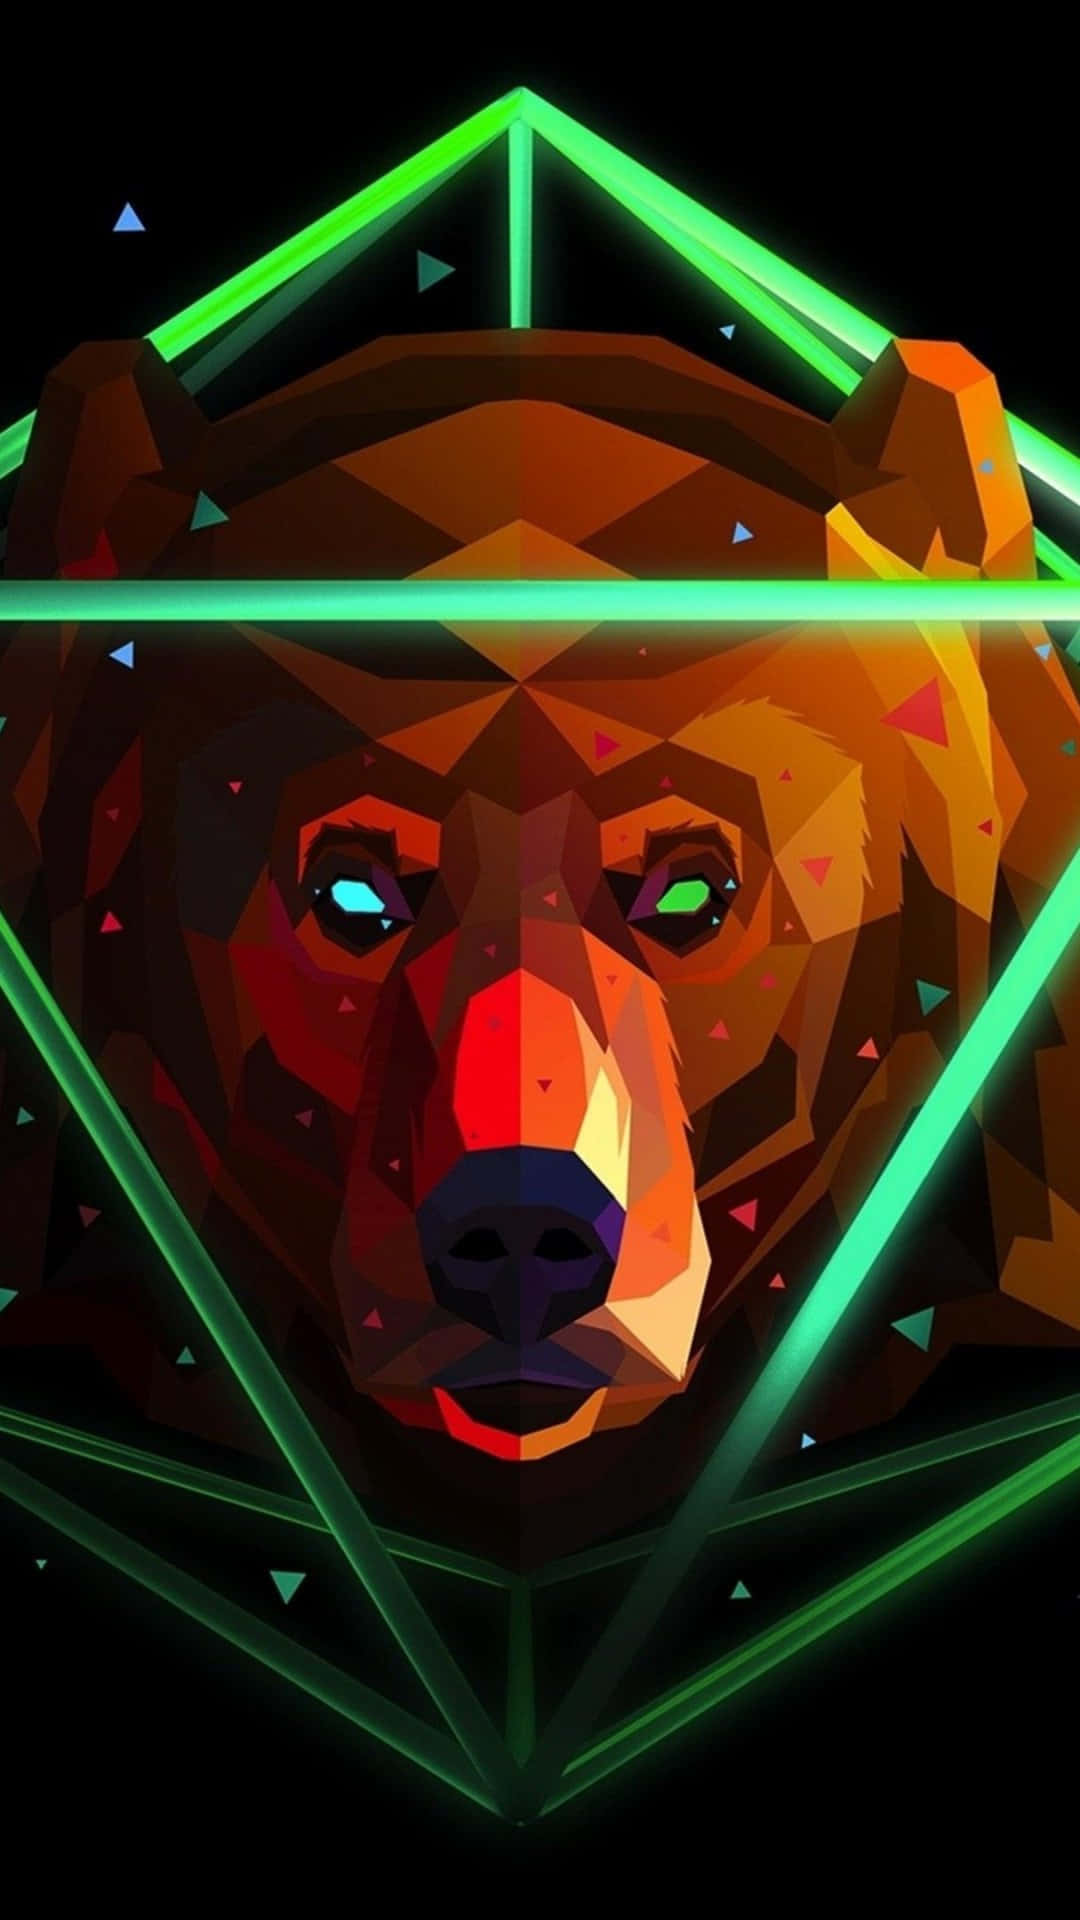 Enbjörn Med En Grön Geometric Huvud. Wallpaper